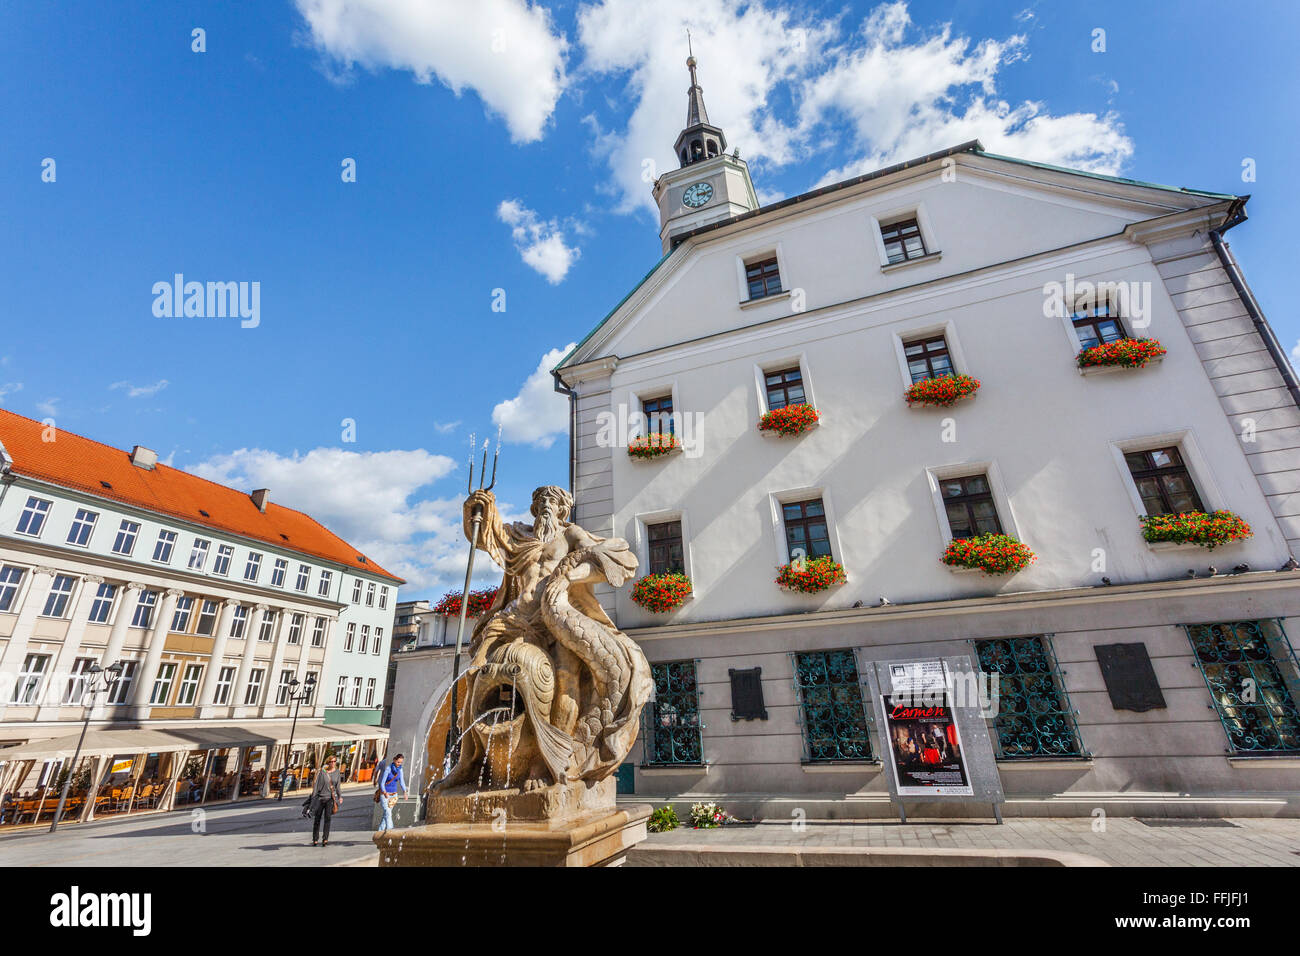 Poland, Upper Silesia, Gliwice (Gleiwitz), view of Rynek the Market Square with Town Hall and Neptune Fountain Stock Photo